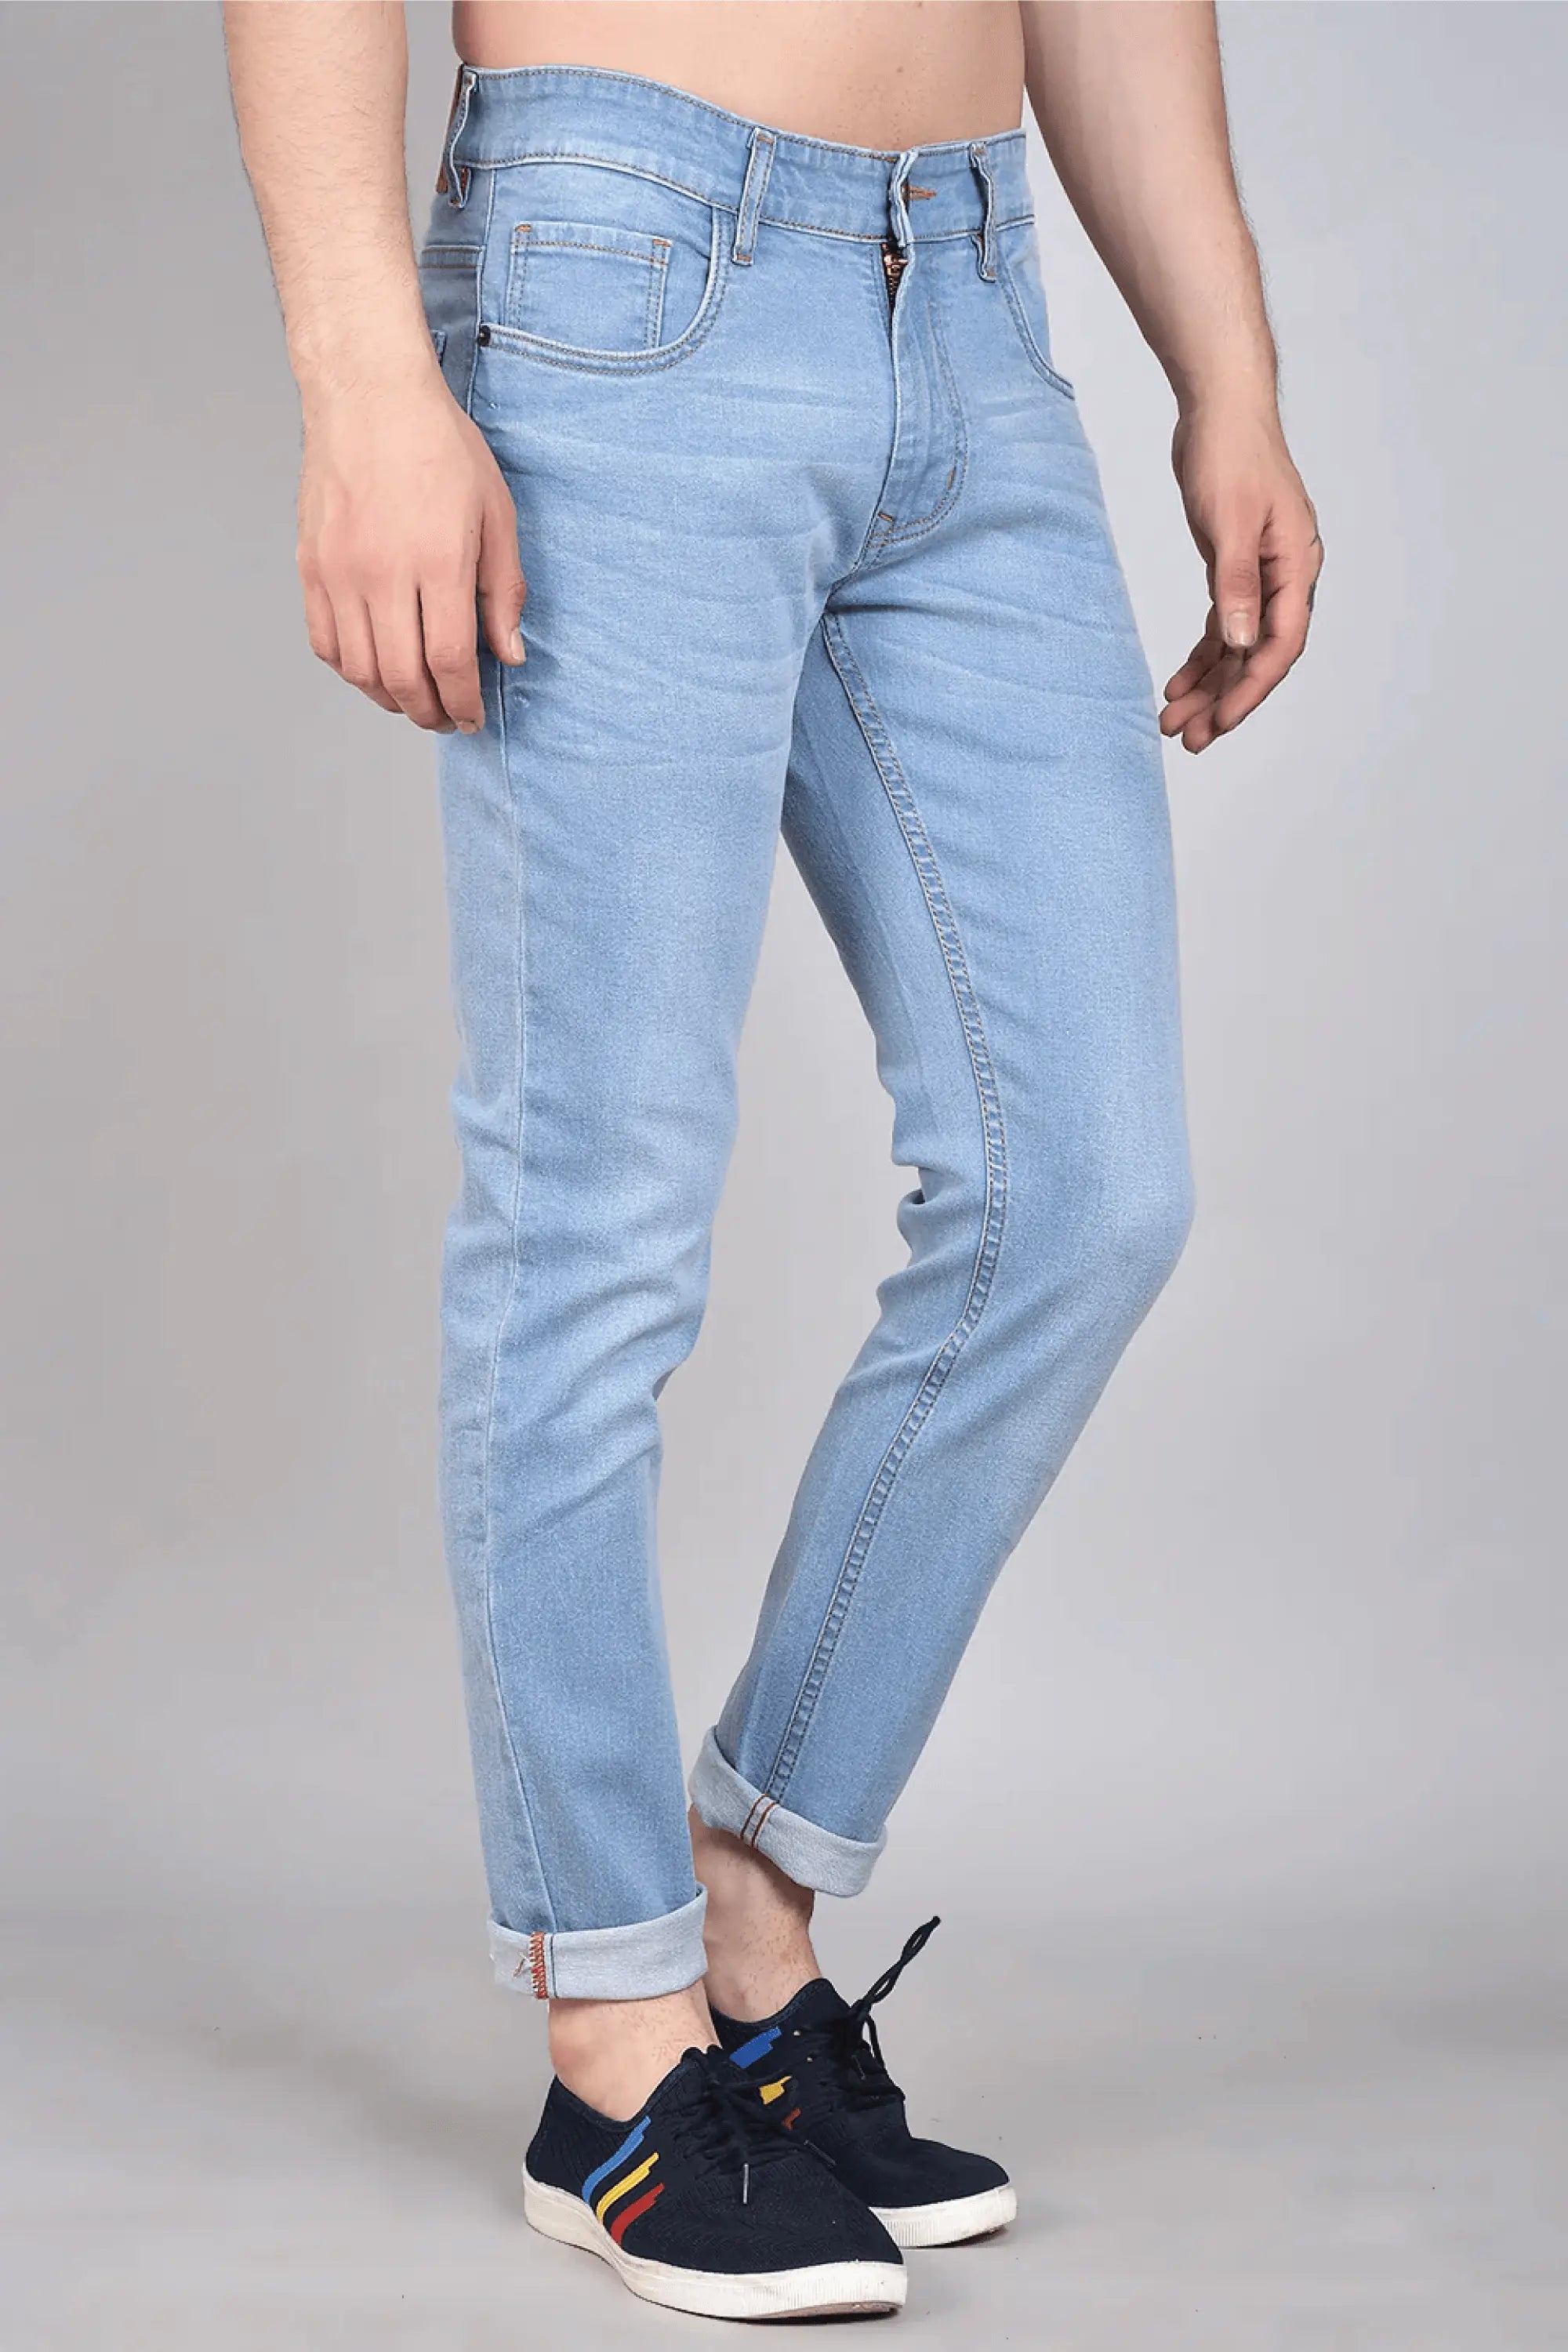 Retro Blue J1 Jeans | American Tall